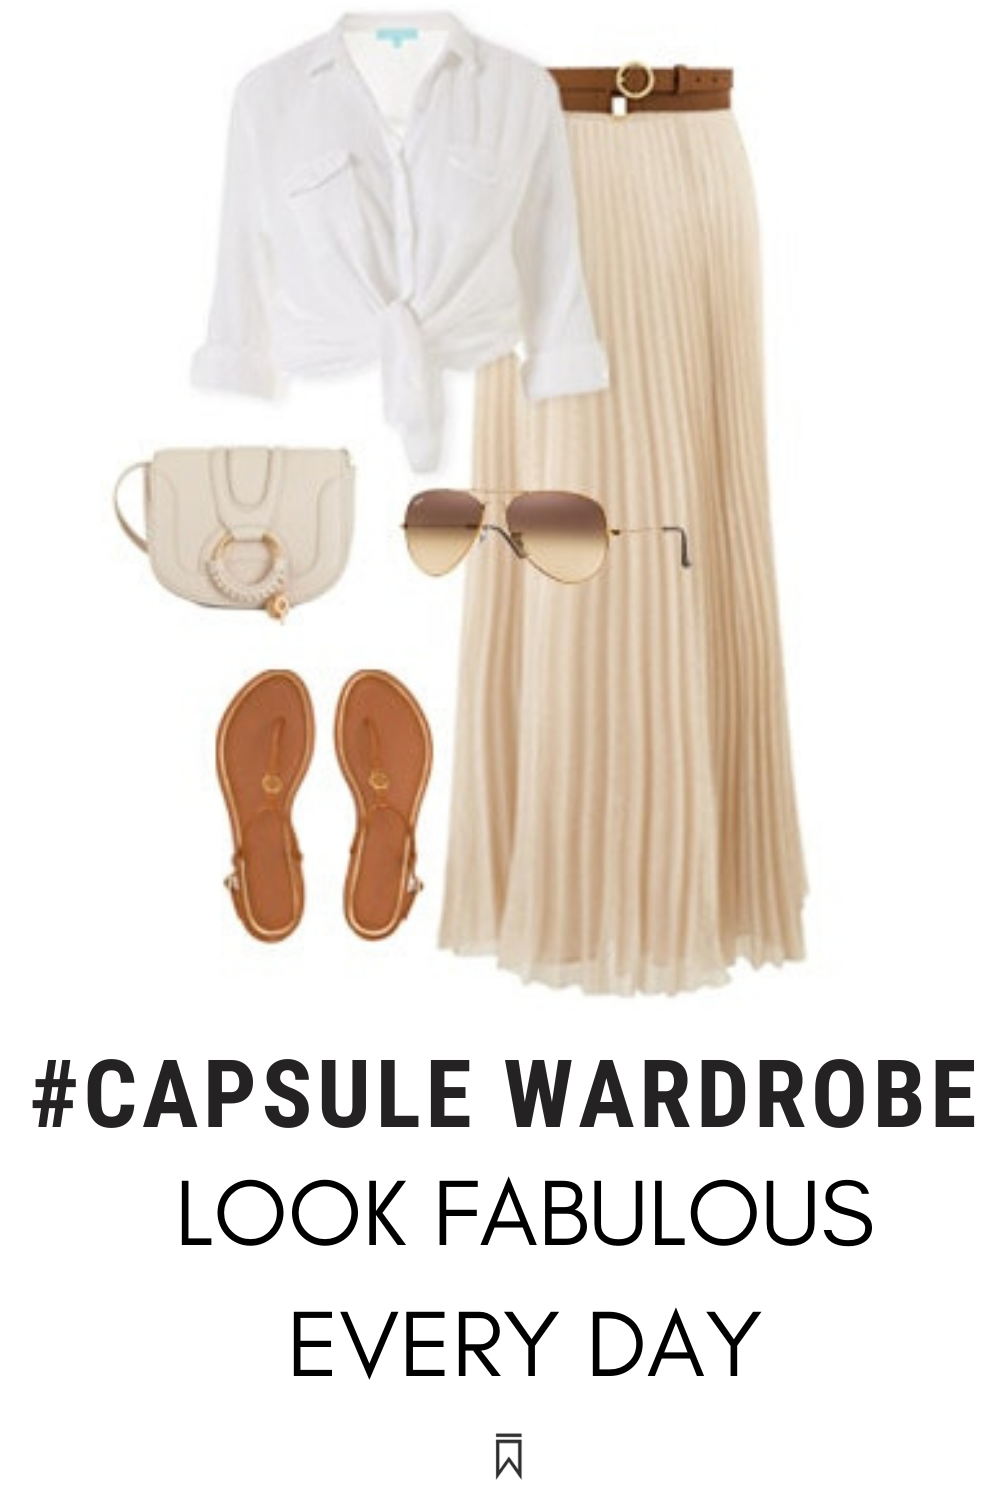 #capsule wardrobe 2020 look fabulous everyday - #capsule wardrobe 2020 look fabulous everyday -   14 simple style Guides ideas